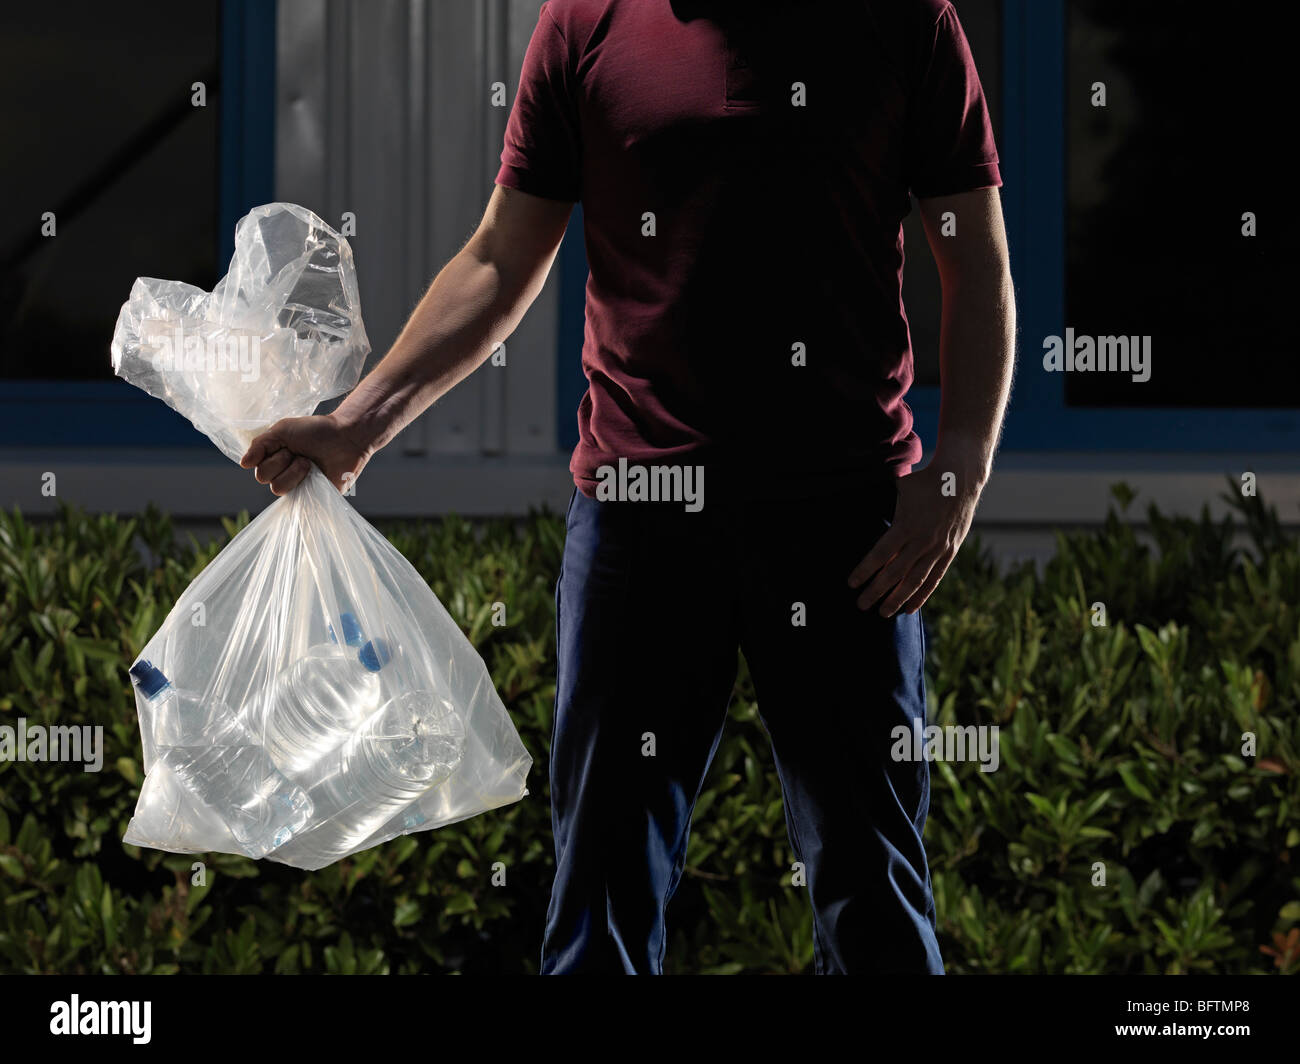 man carrying bag of water bottles Stock Photo